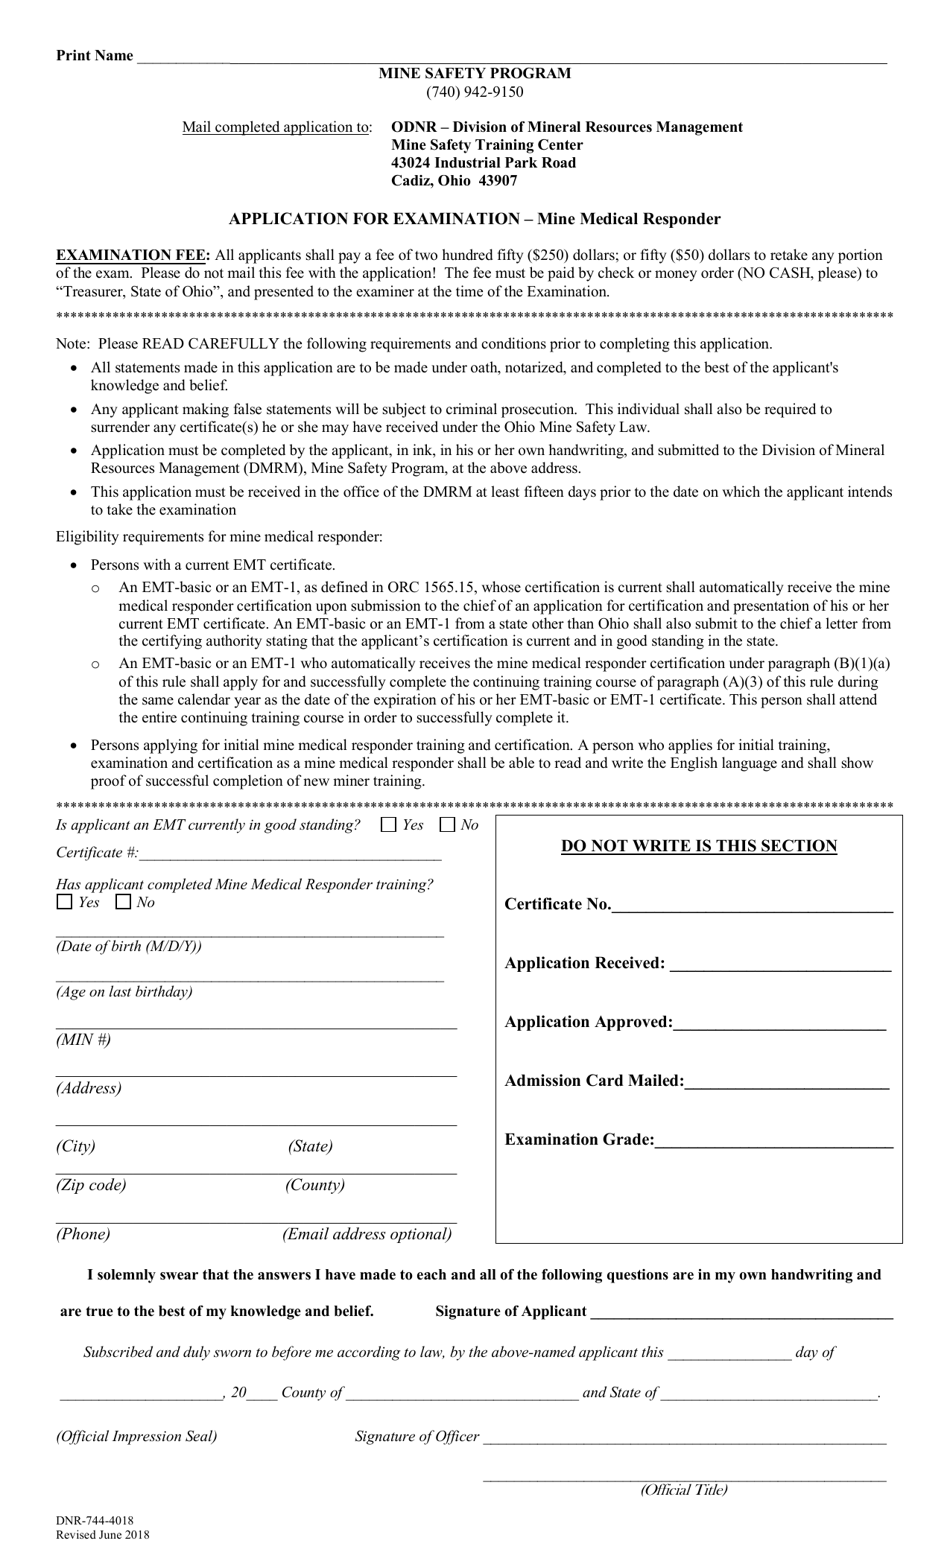 Form DNR-744-4018 Application for Examination - Mine Medical Responder - Ohio, Page 1